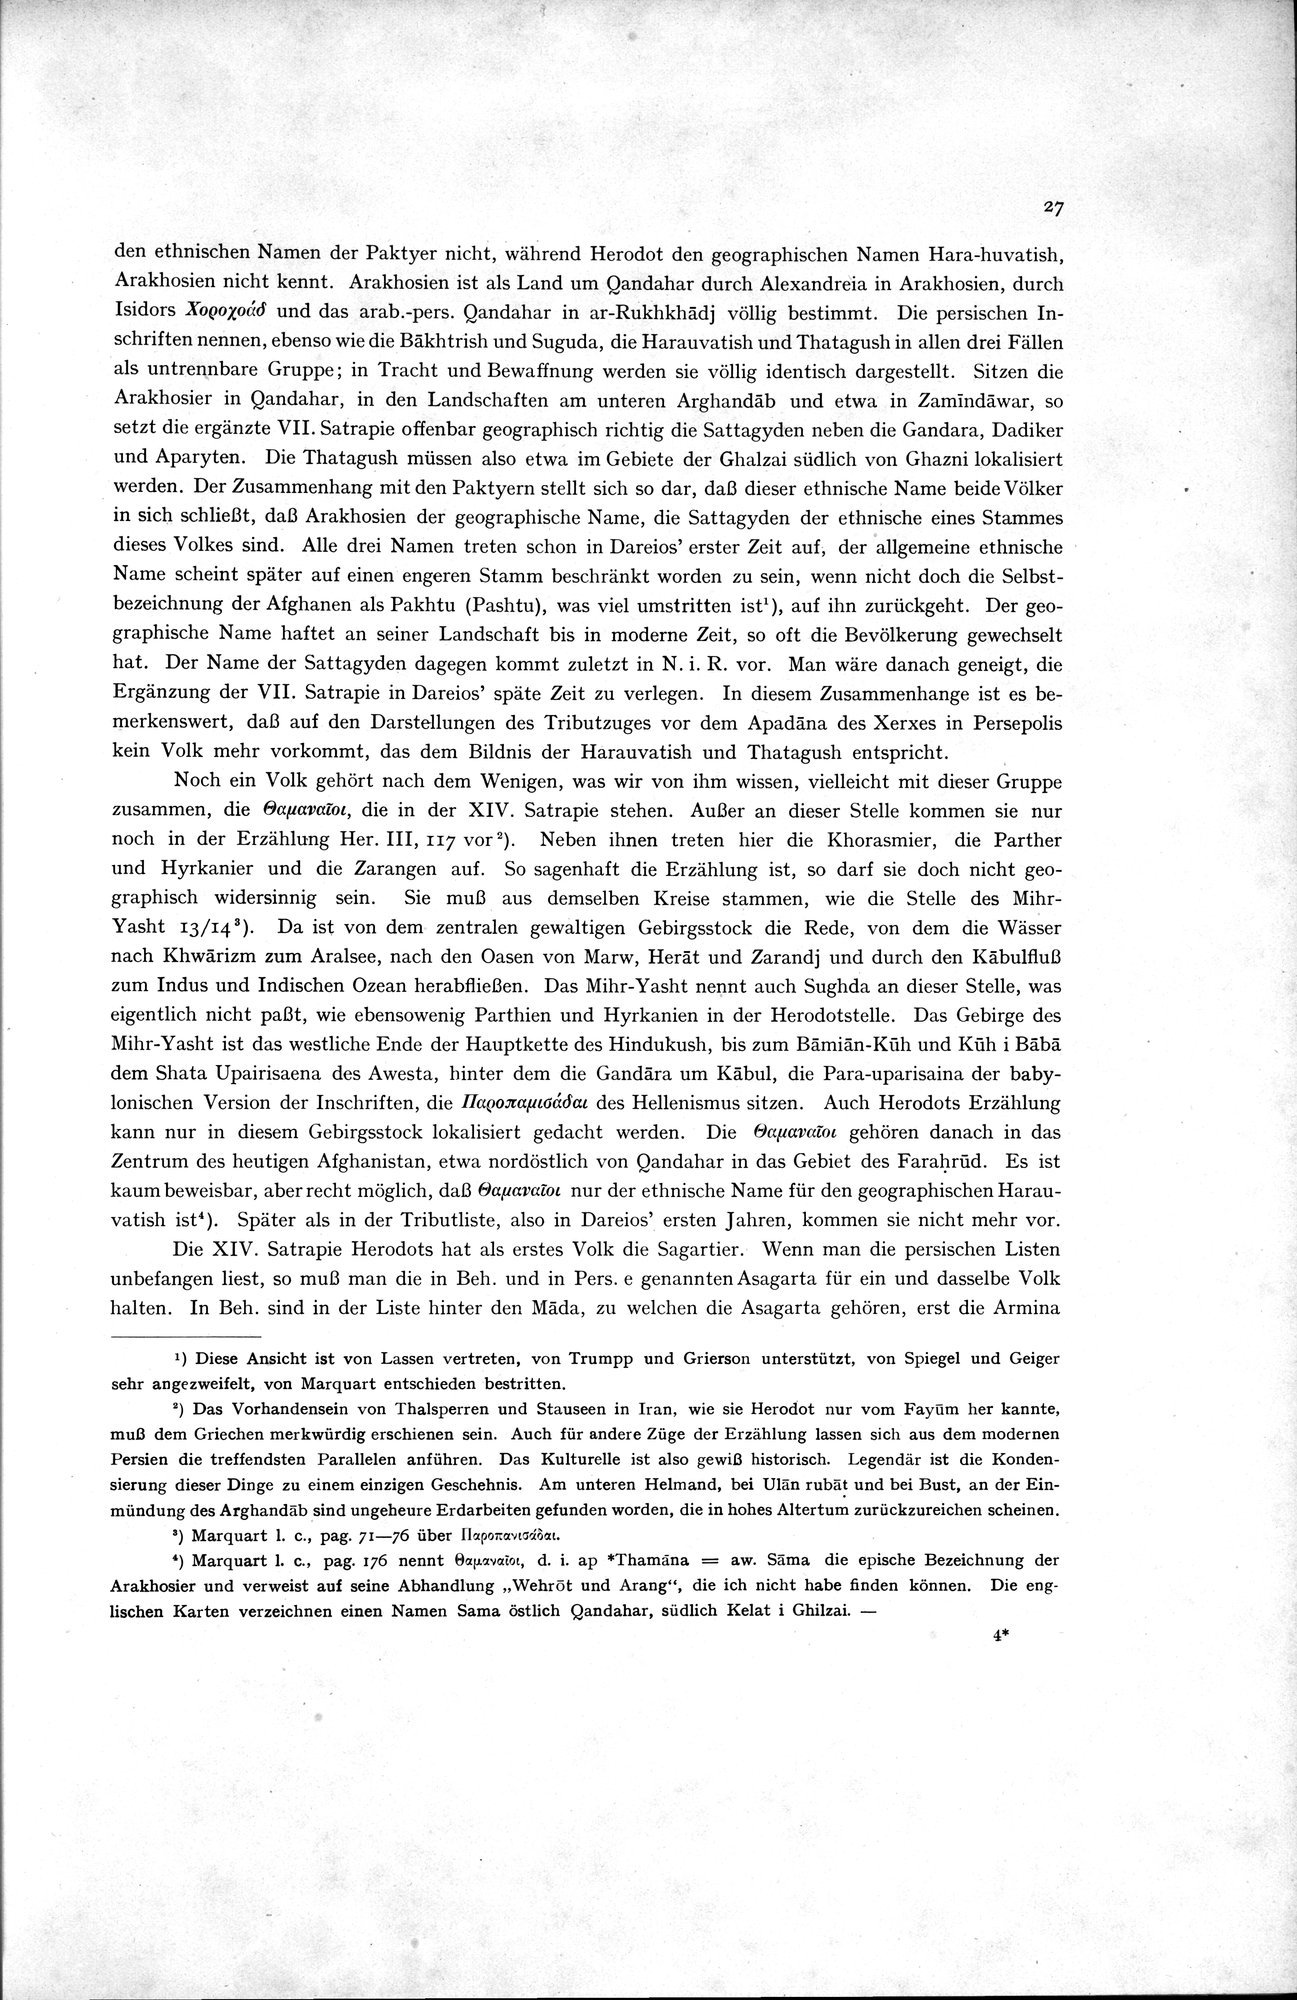 Iranische Felsreliefs : vol.1 / Page 39 (Grayscale High Resolution Image)